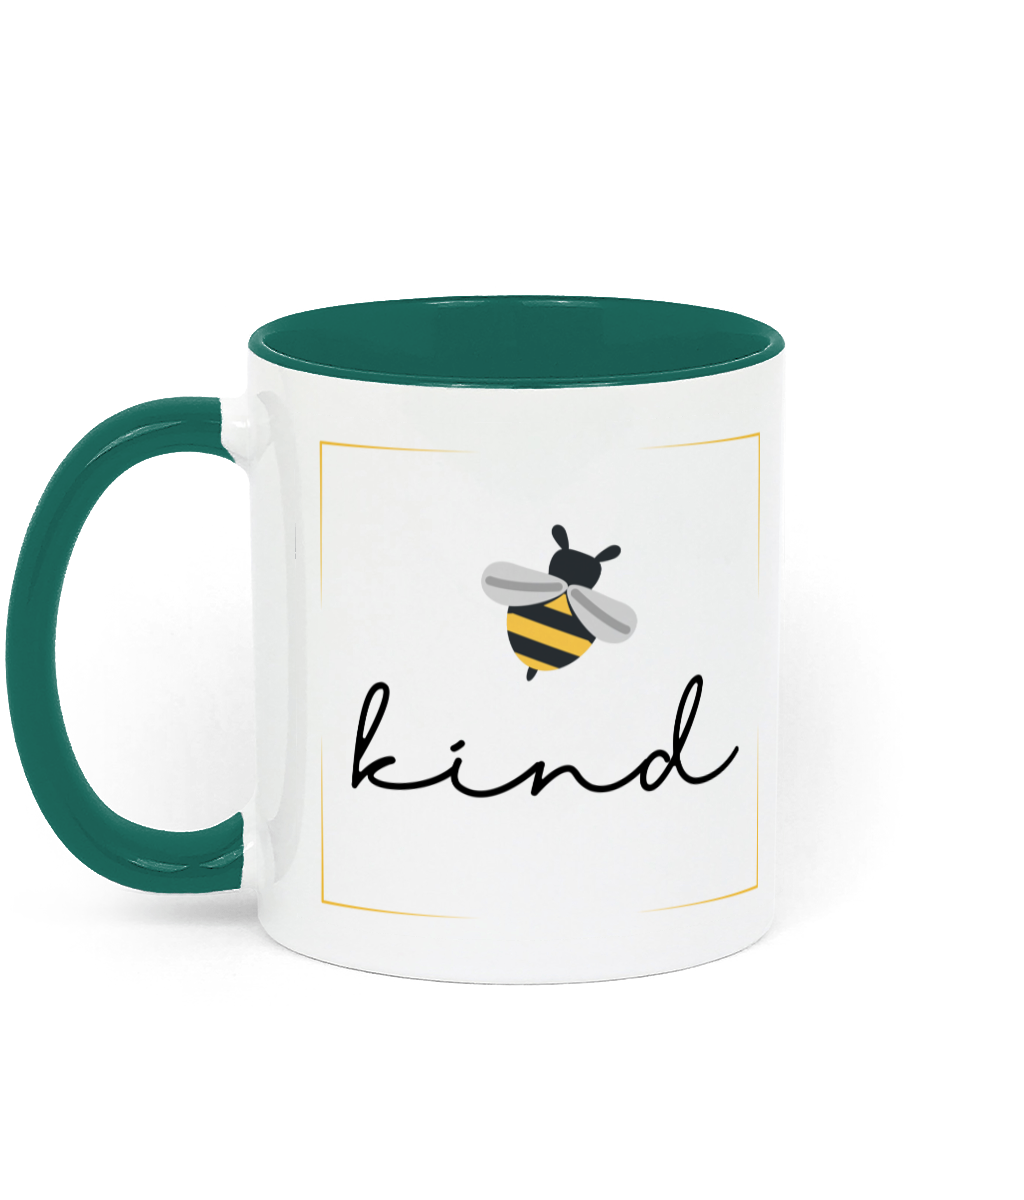 Be Kind Mug.11 oz mug. Daily Affirmations, Motivation, Inspiration. Perfect Gift. Two-toned. Green.